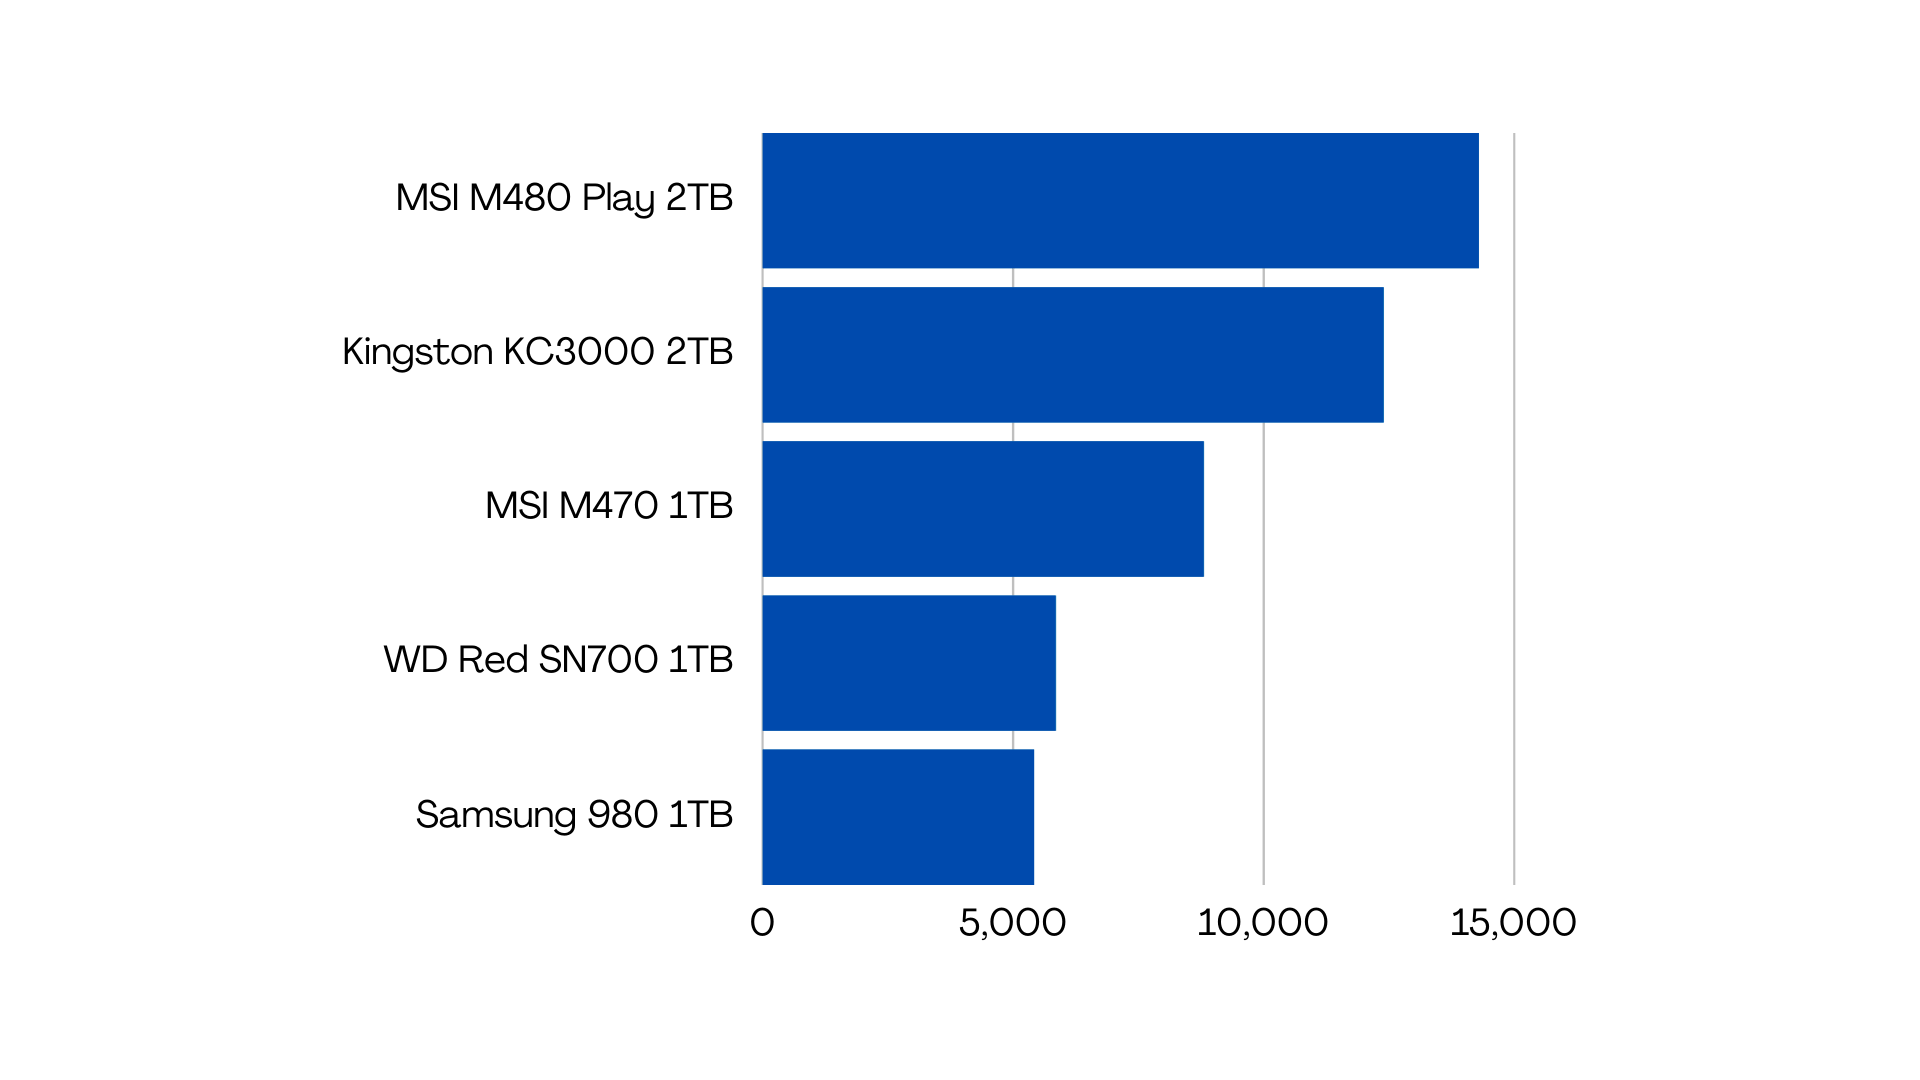 MSI Spatium M480 PLAY 2TB